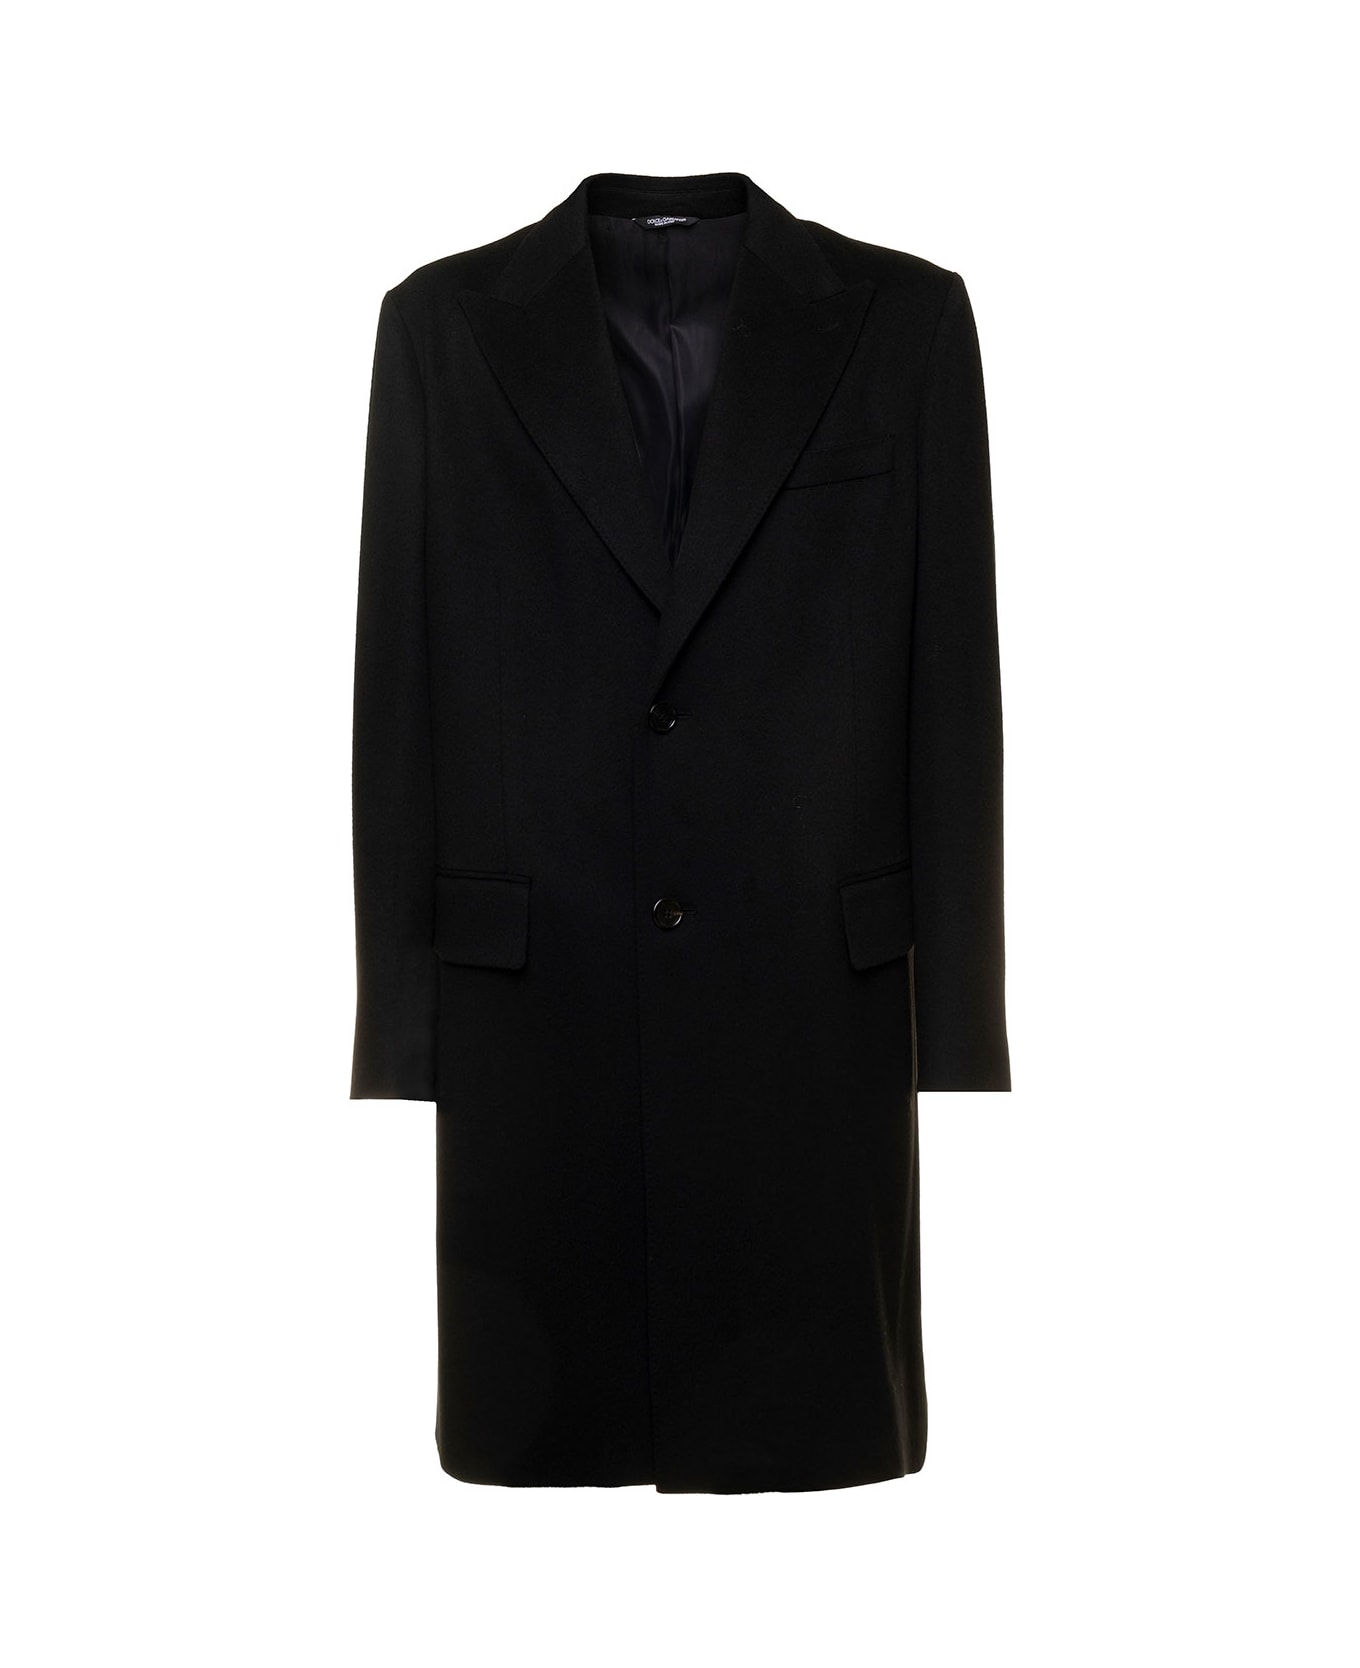 Dolce bag & Gabbana Black Single-breasted Coat In Wool Man Dolce bag & Gabbana - Black